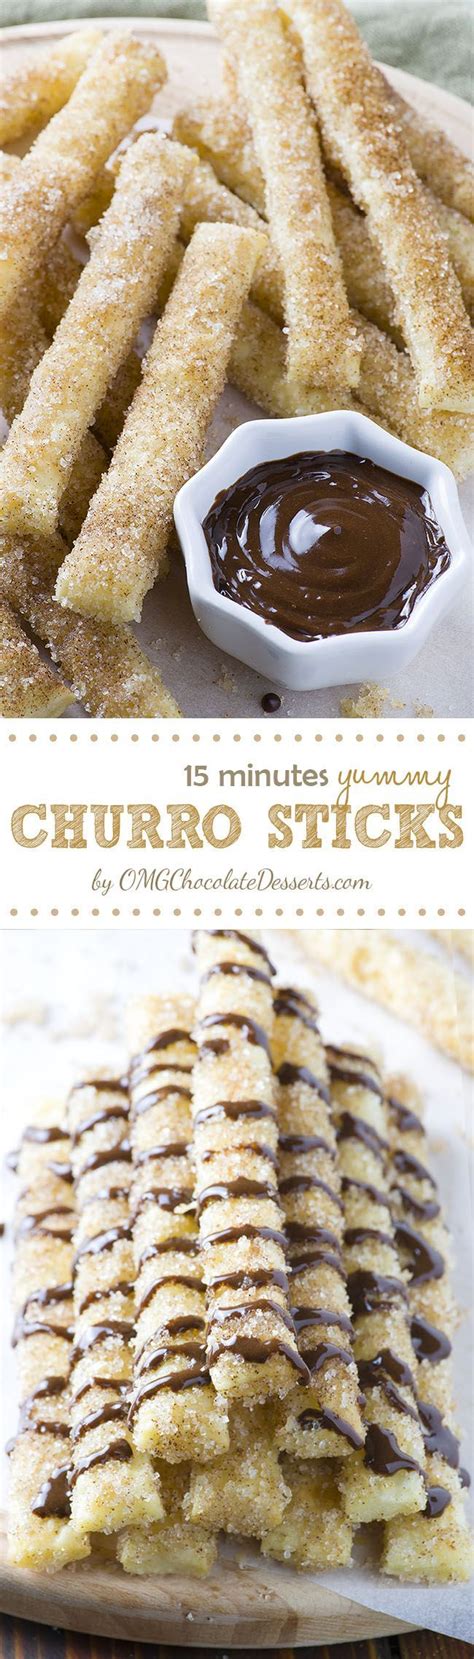 15 Minute Churro Sticks With Video Recipe Chocolate Dessert